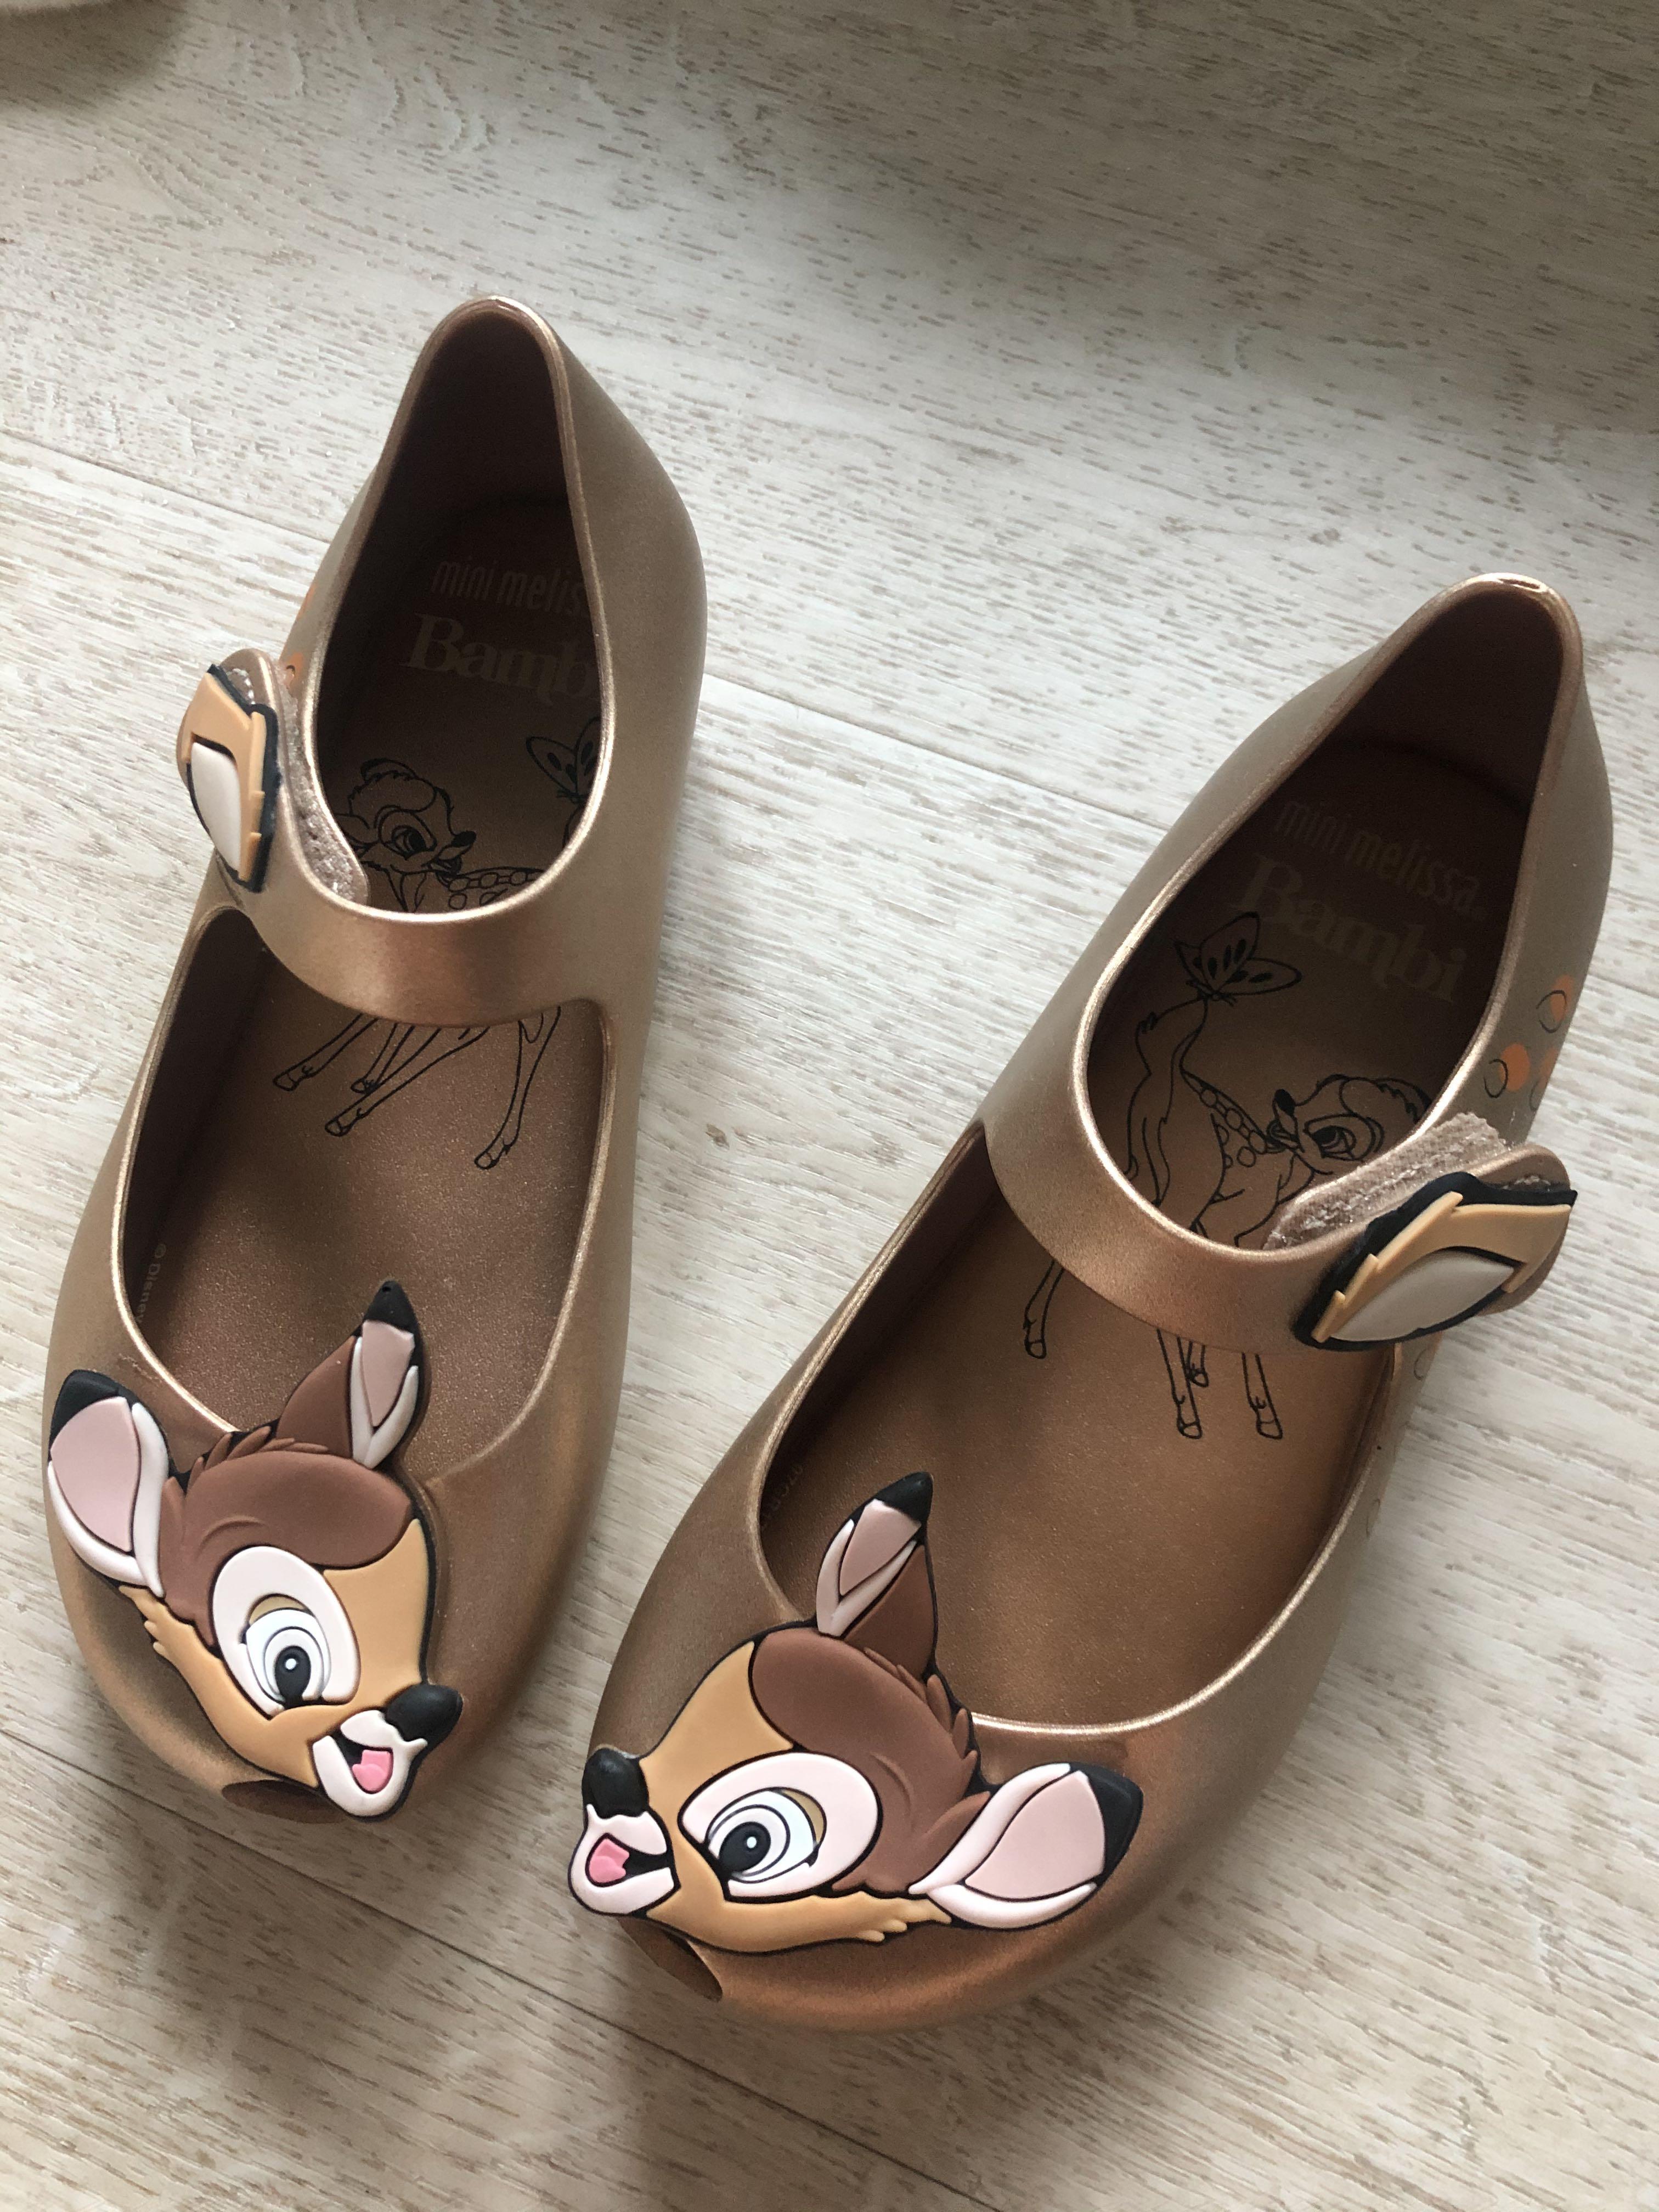 mini melissa bambi shoes